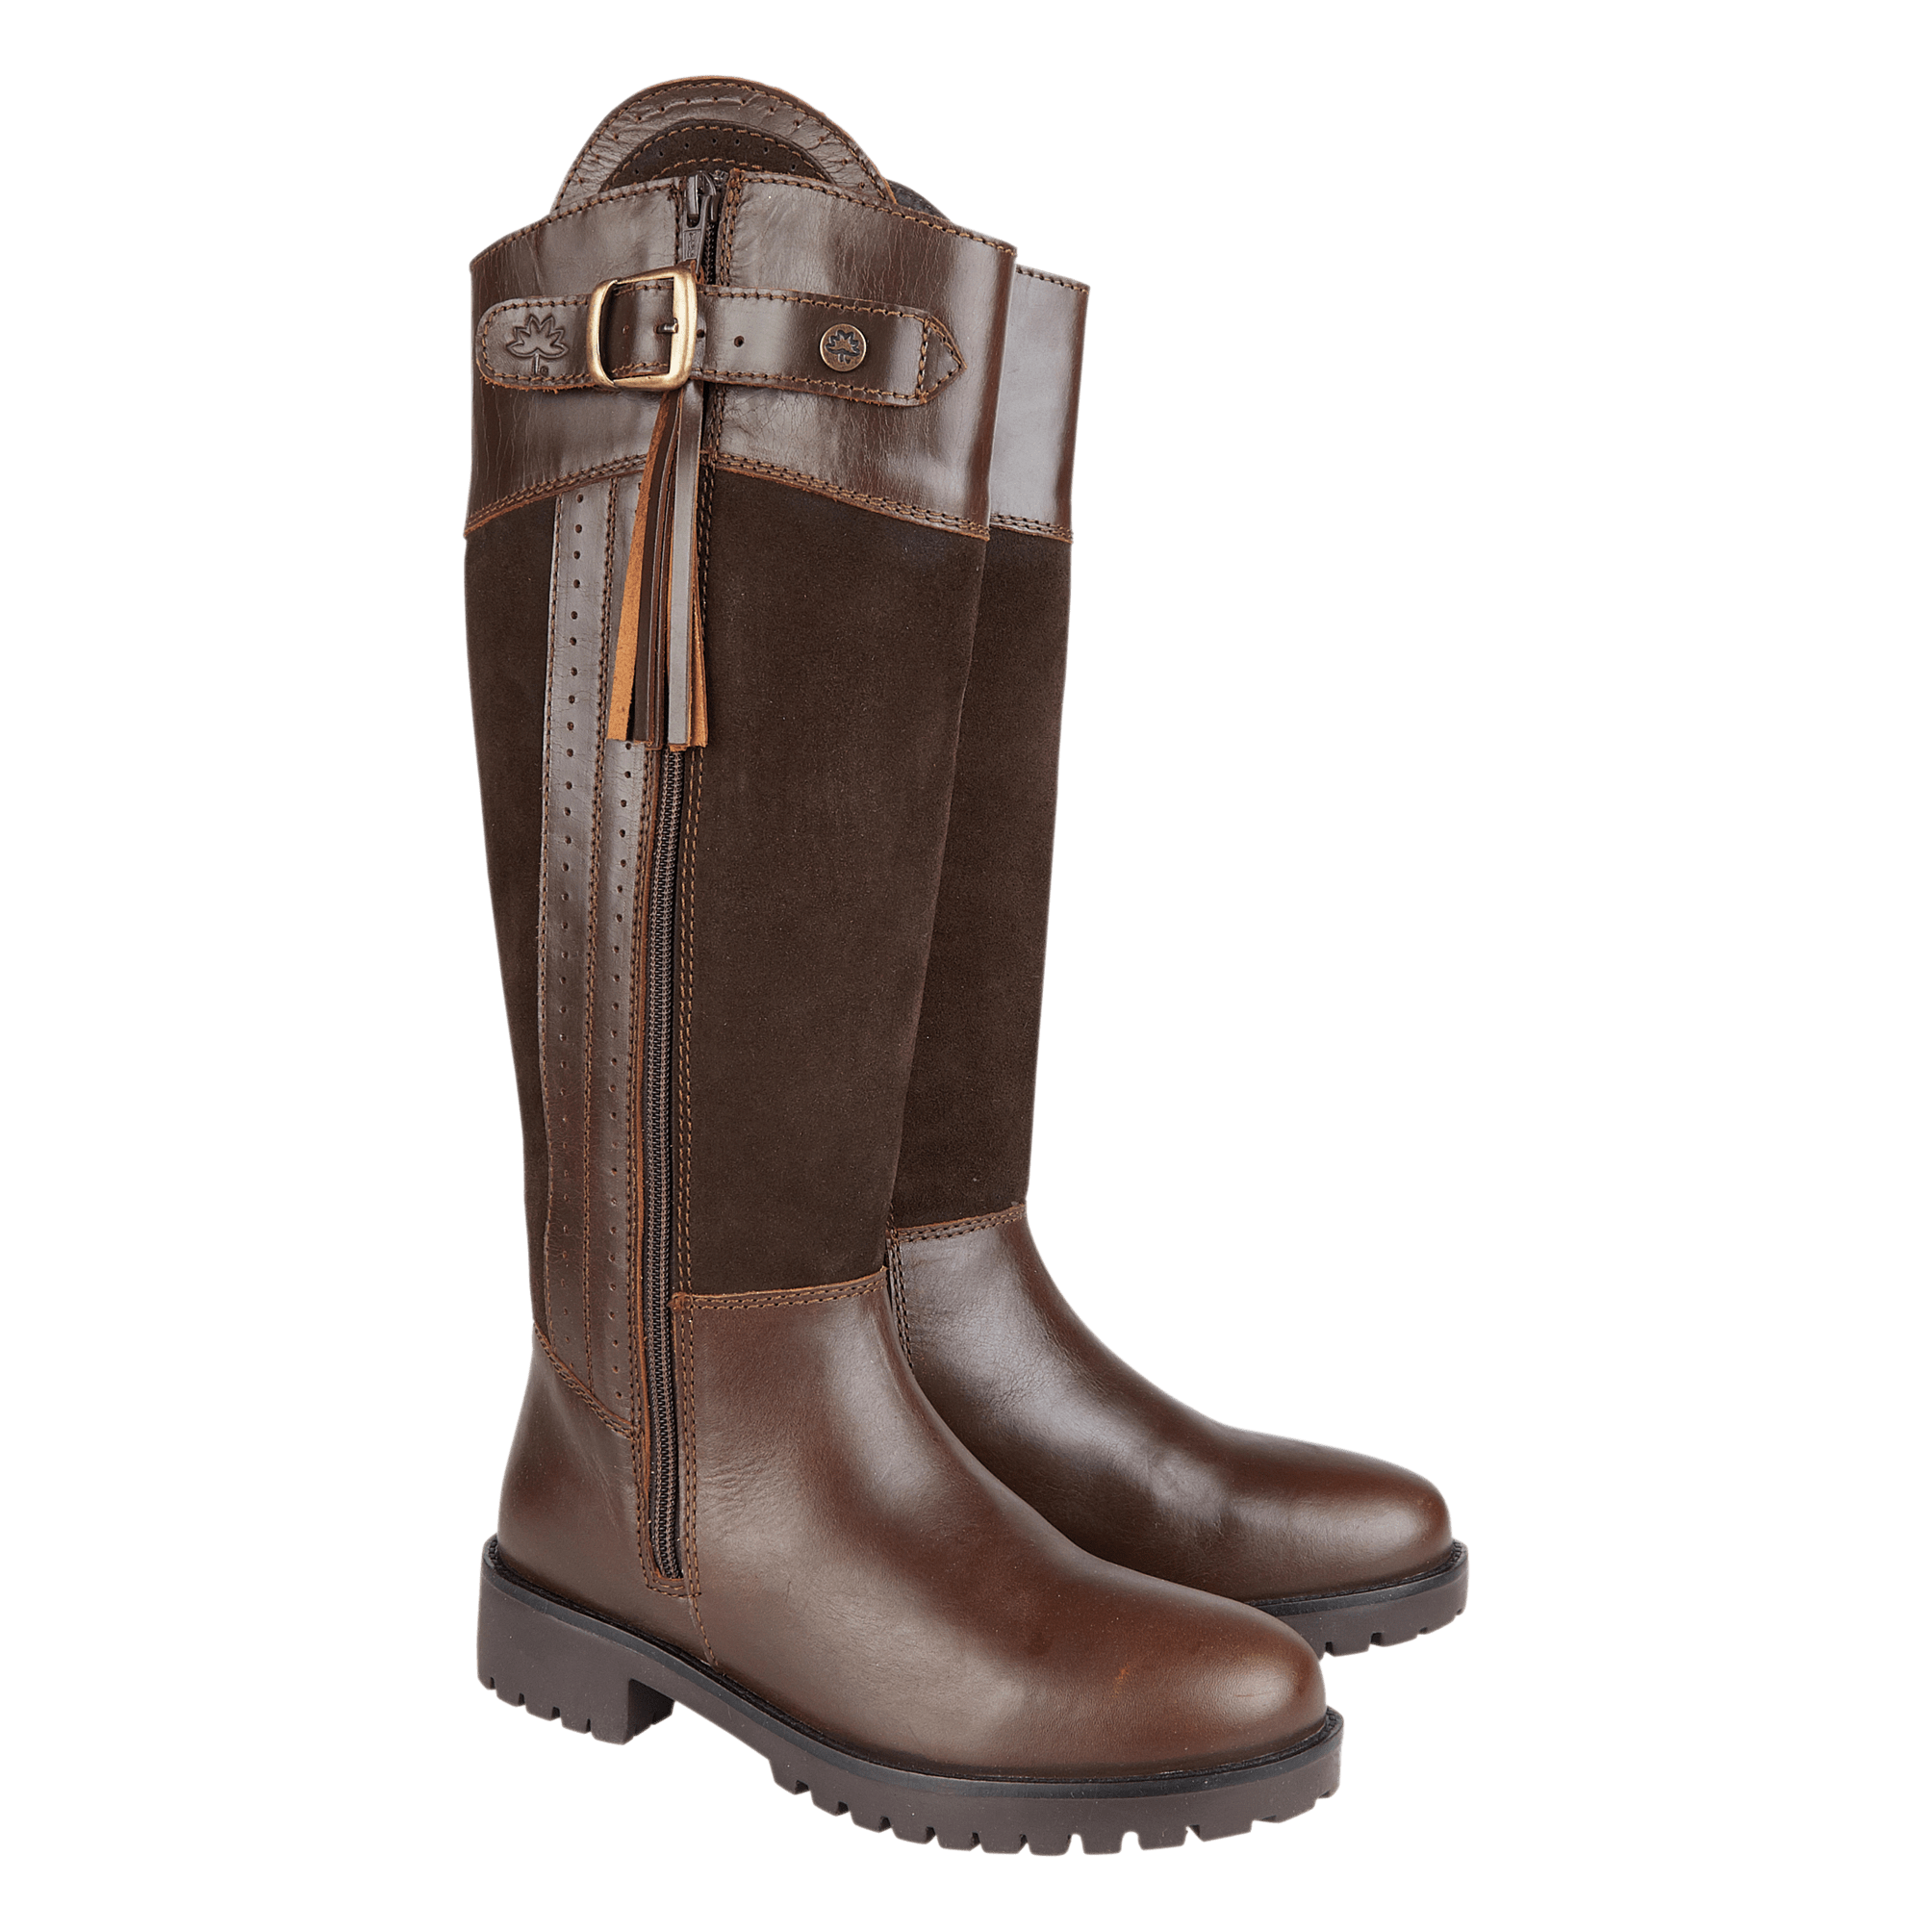 Wincanton Country Boots